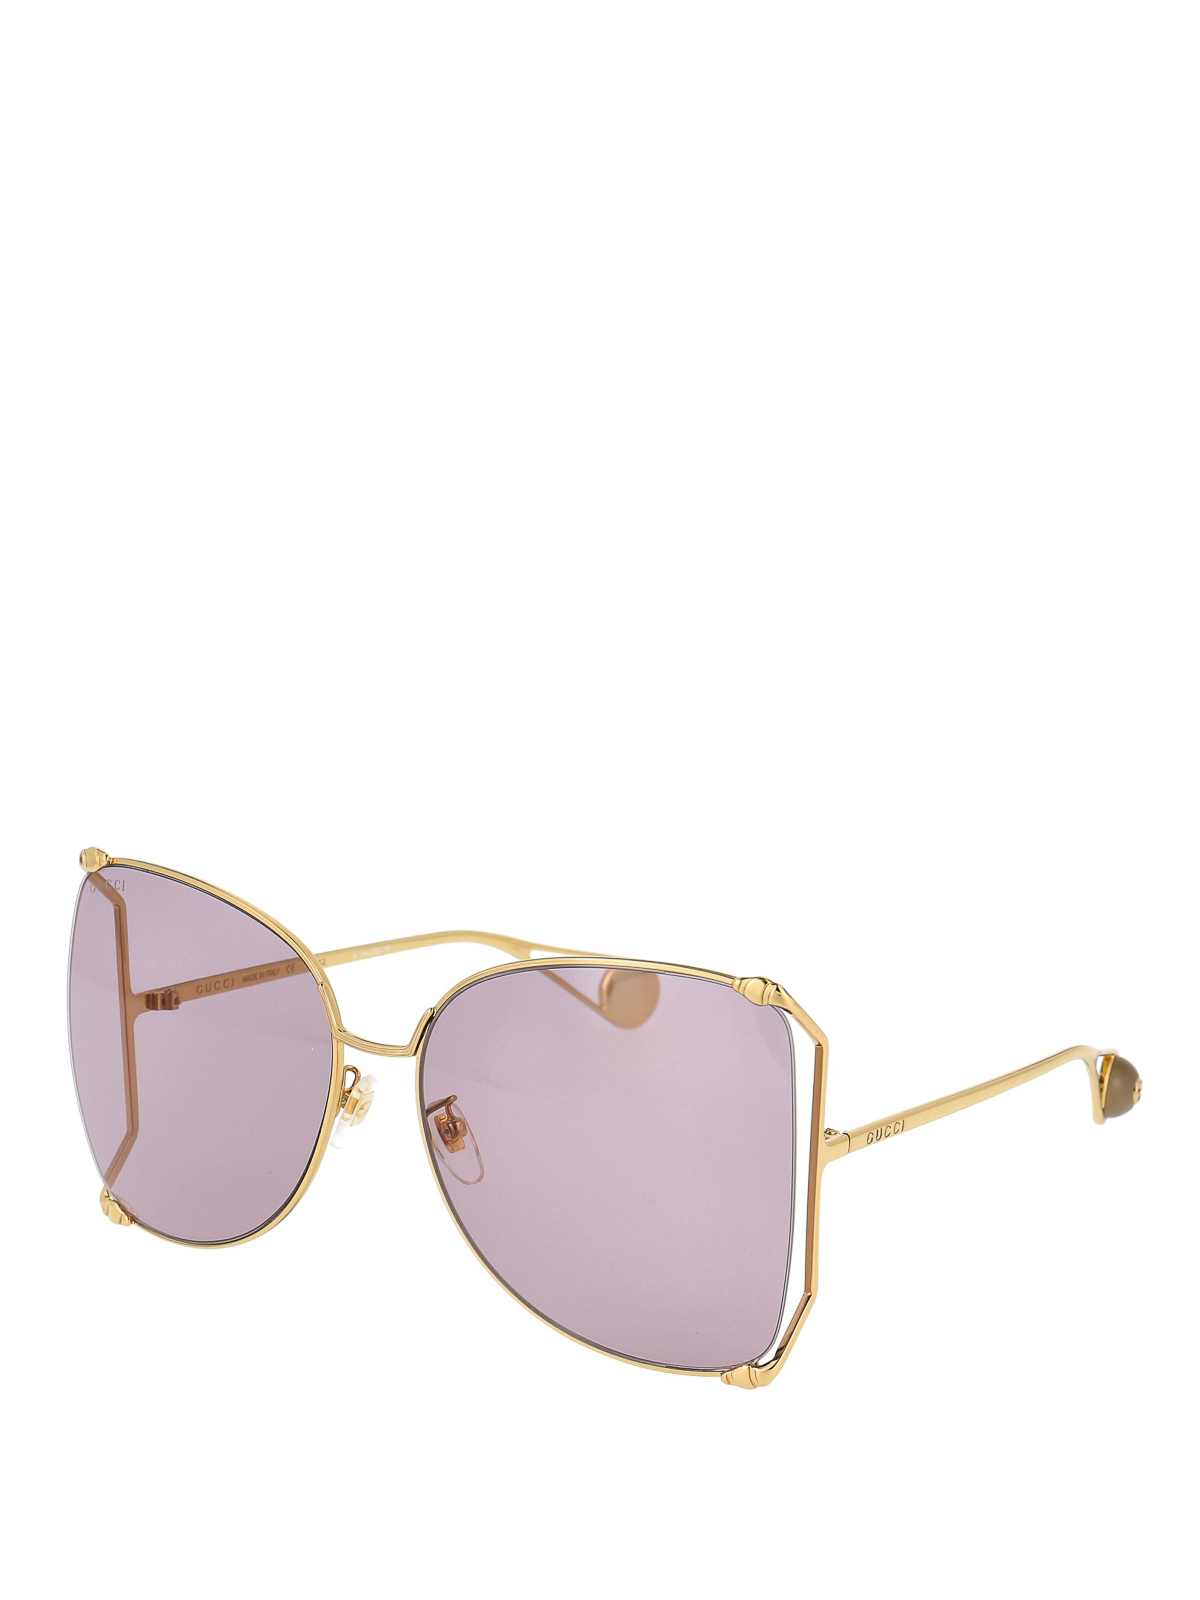 Sunglasses Gucci - Butterfly sunglasses - GG0252S013